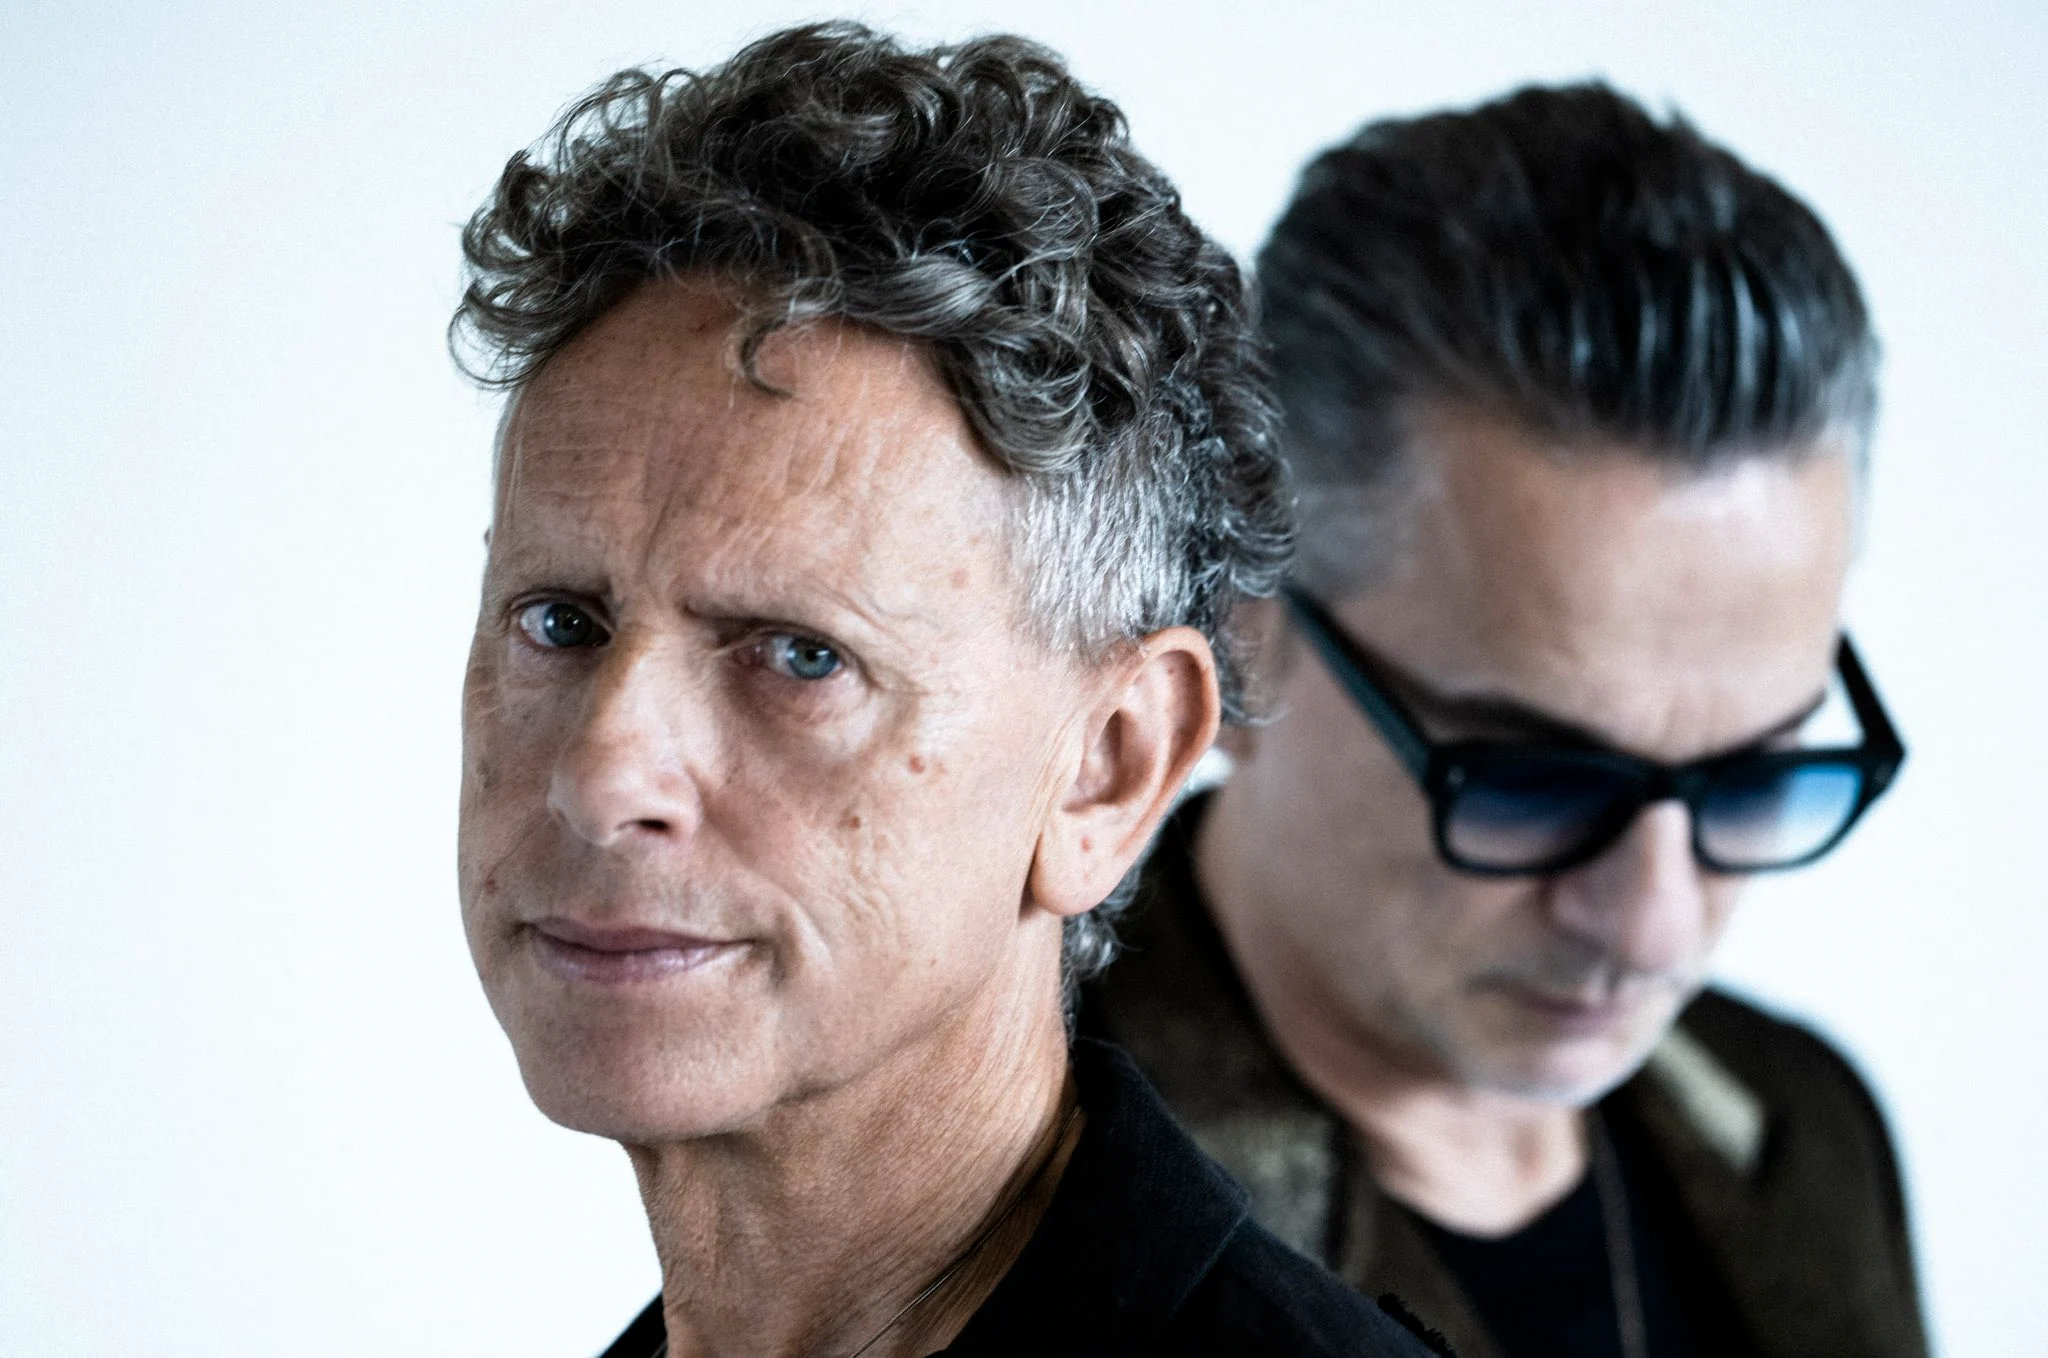 Depeche Mode to release new single 'Ghosts Again' ahead of 'Memento Mori'  album